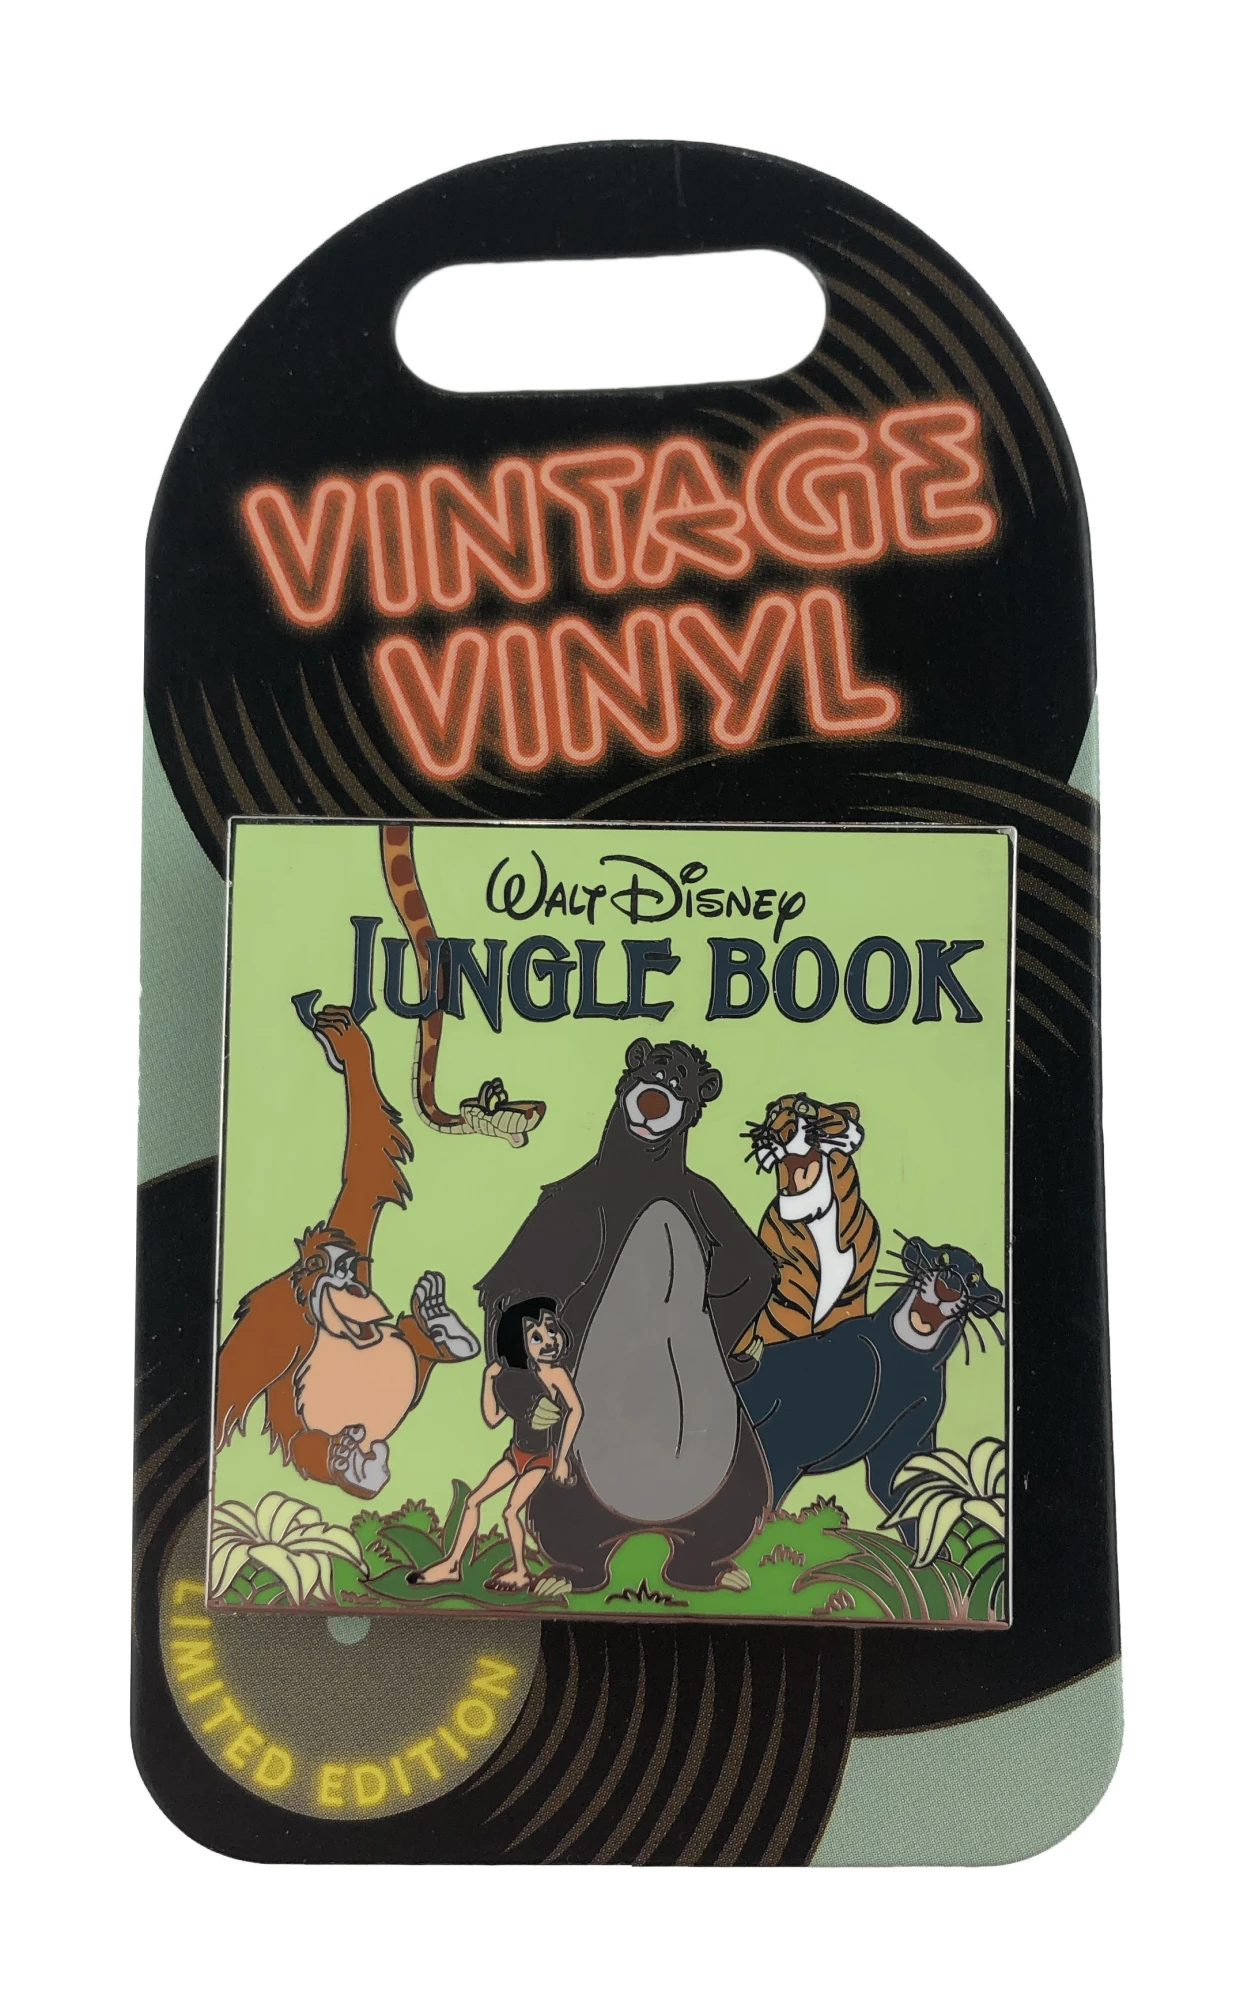 item Disney Pin - Vintage Vinyl - Pin of the Month - Jungle Book 135016